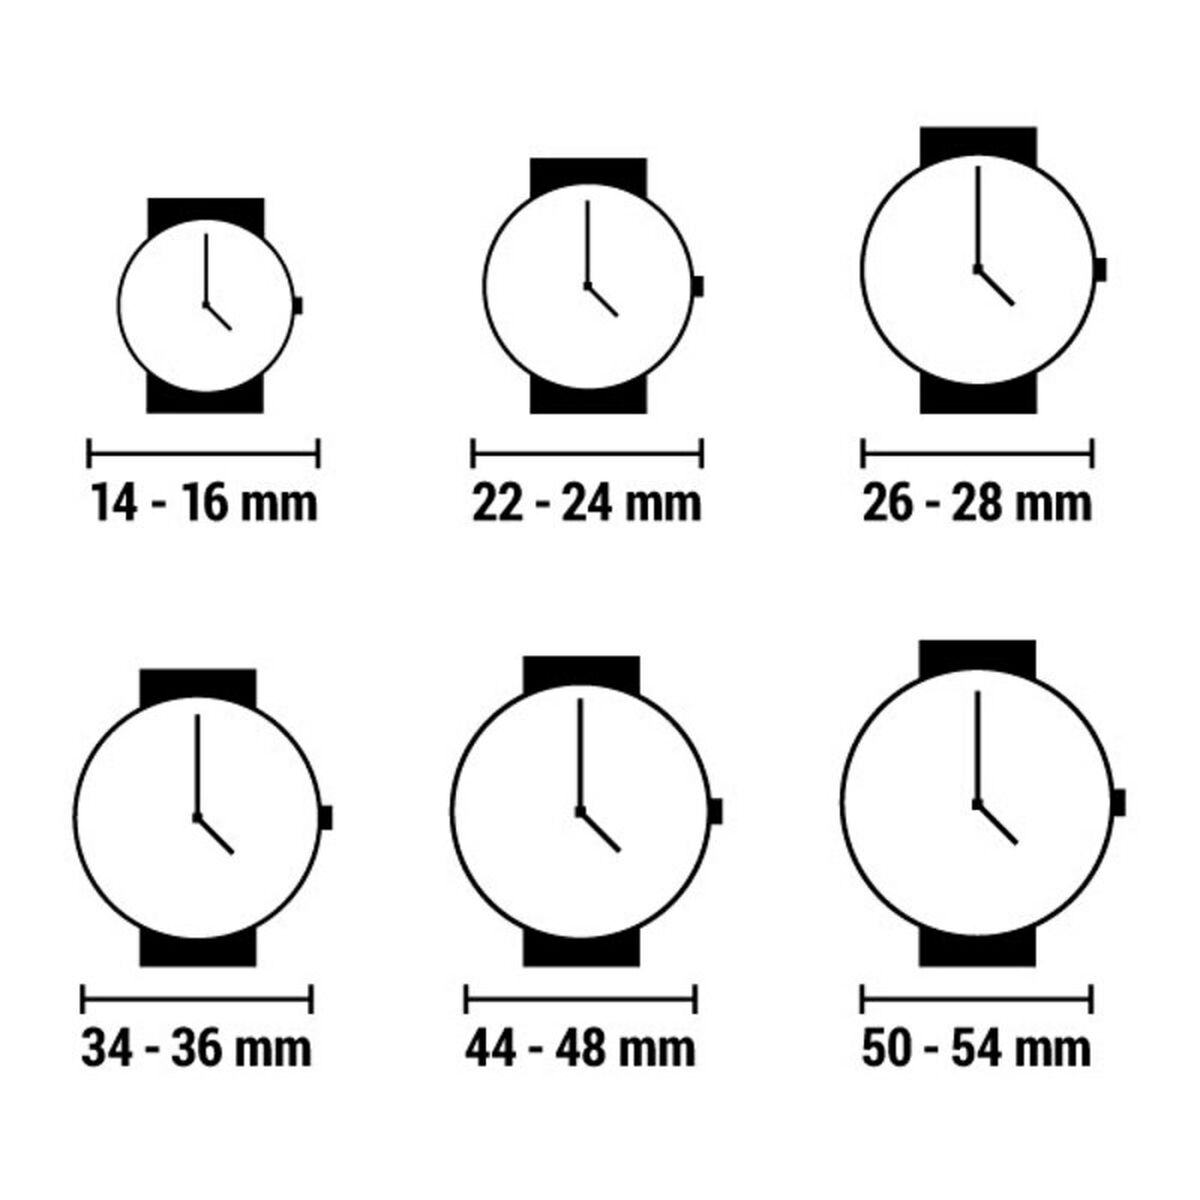 Horloge Heren Glam Rock GR33005 (Ø 50 mm)